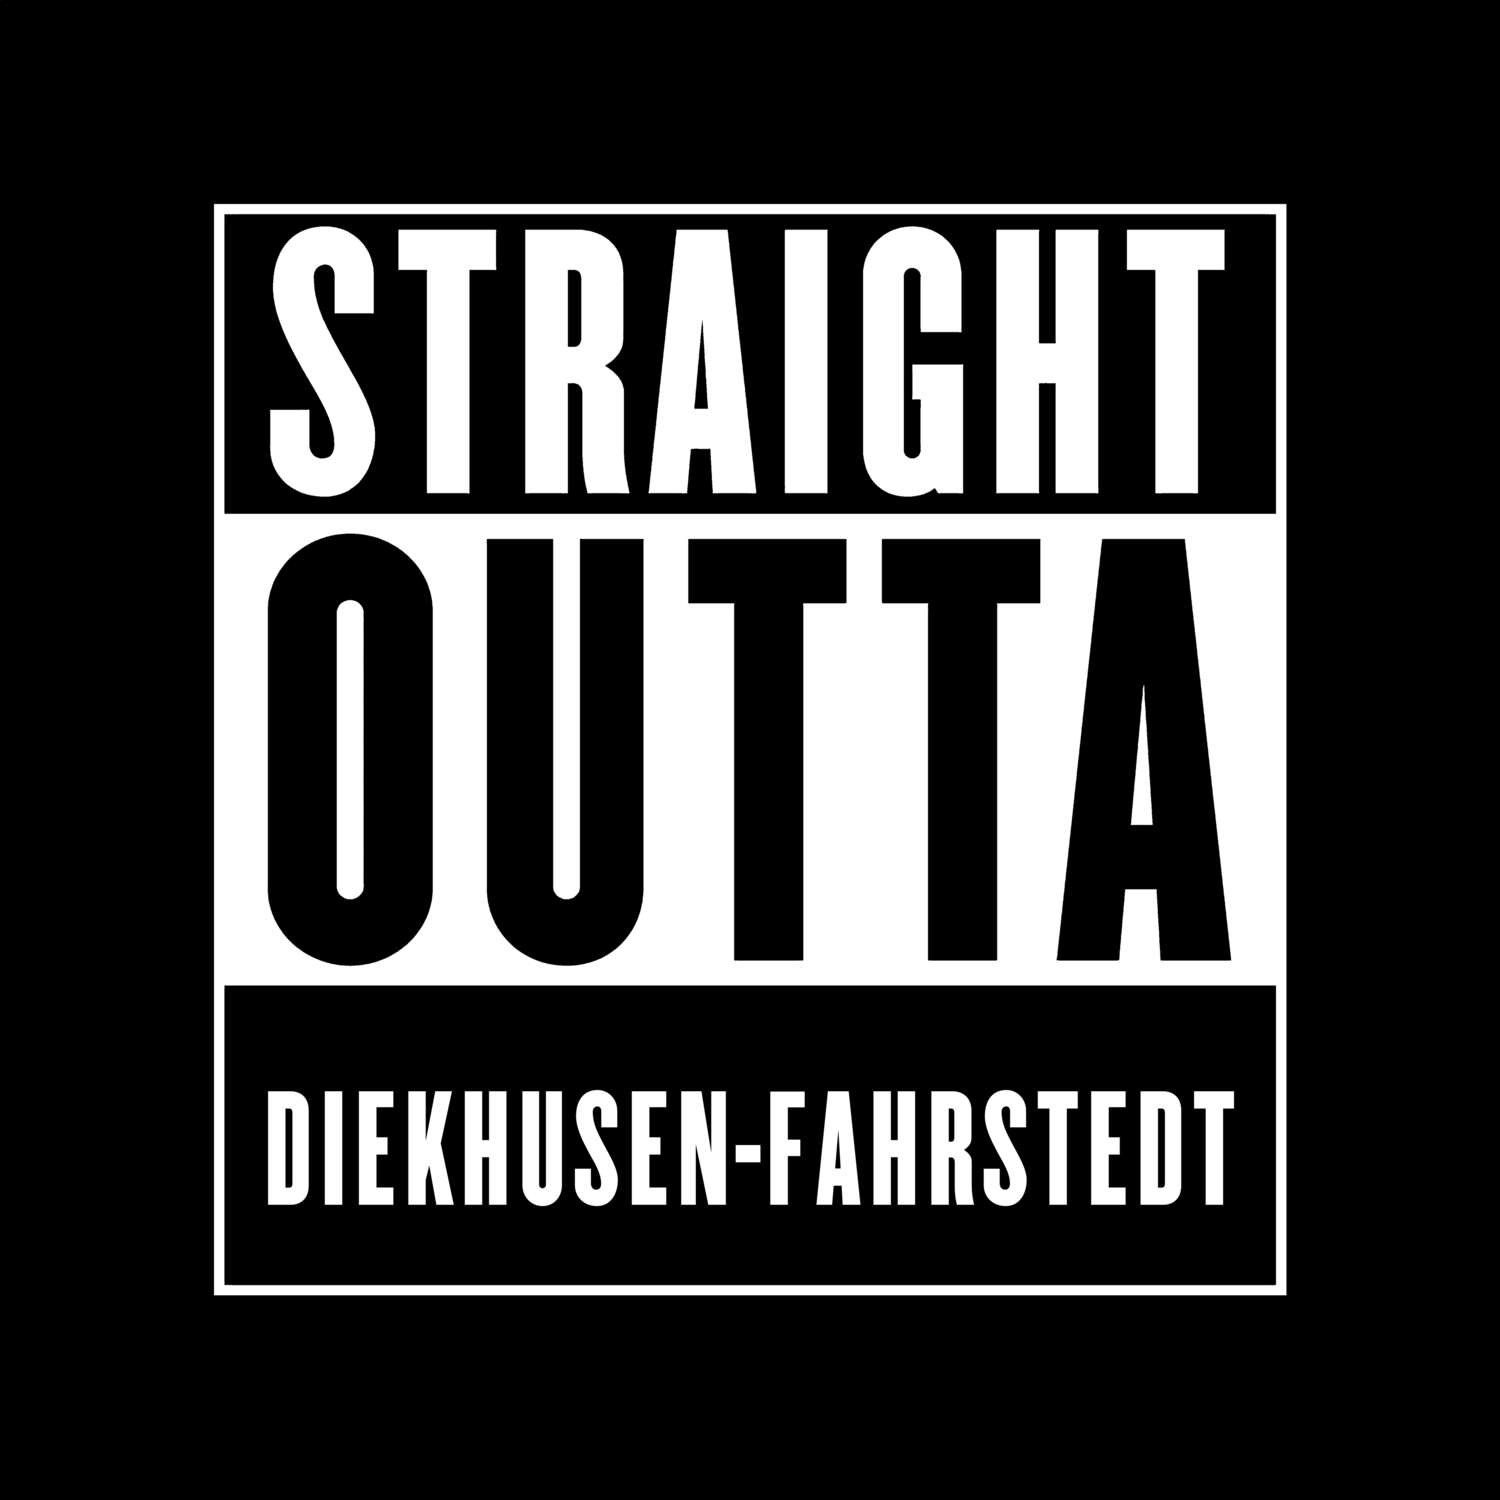 Diekhusen-Fahrstedt T-Shirt »Straight Outta«